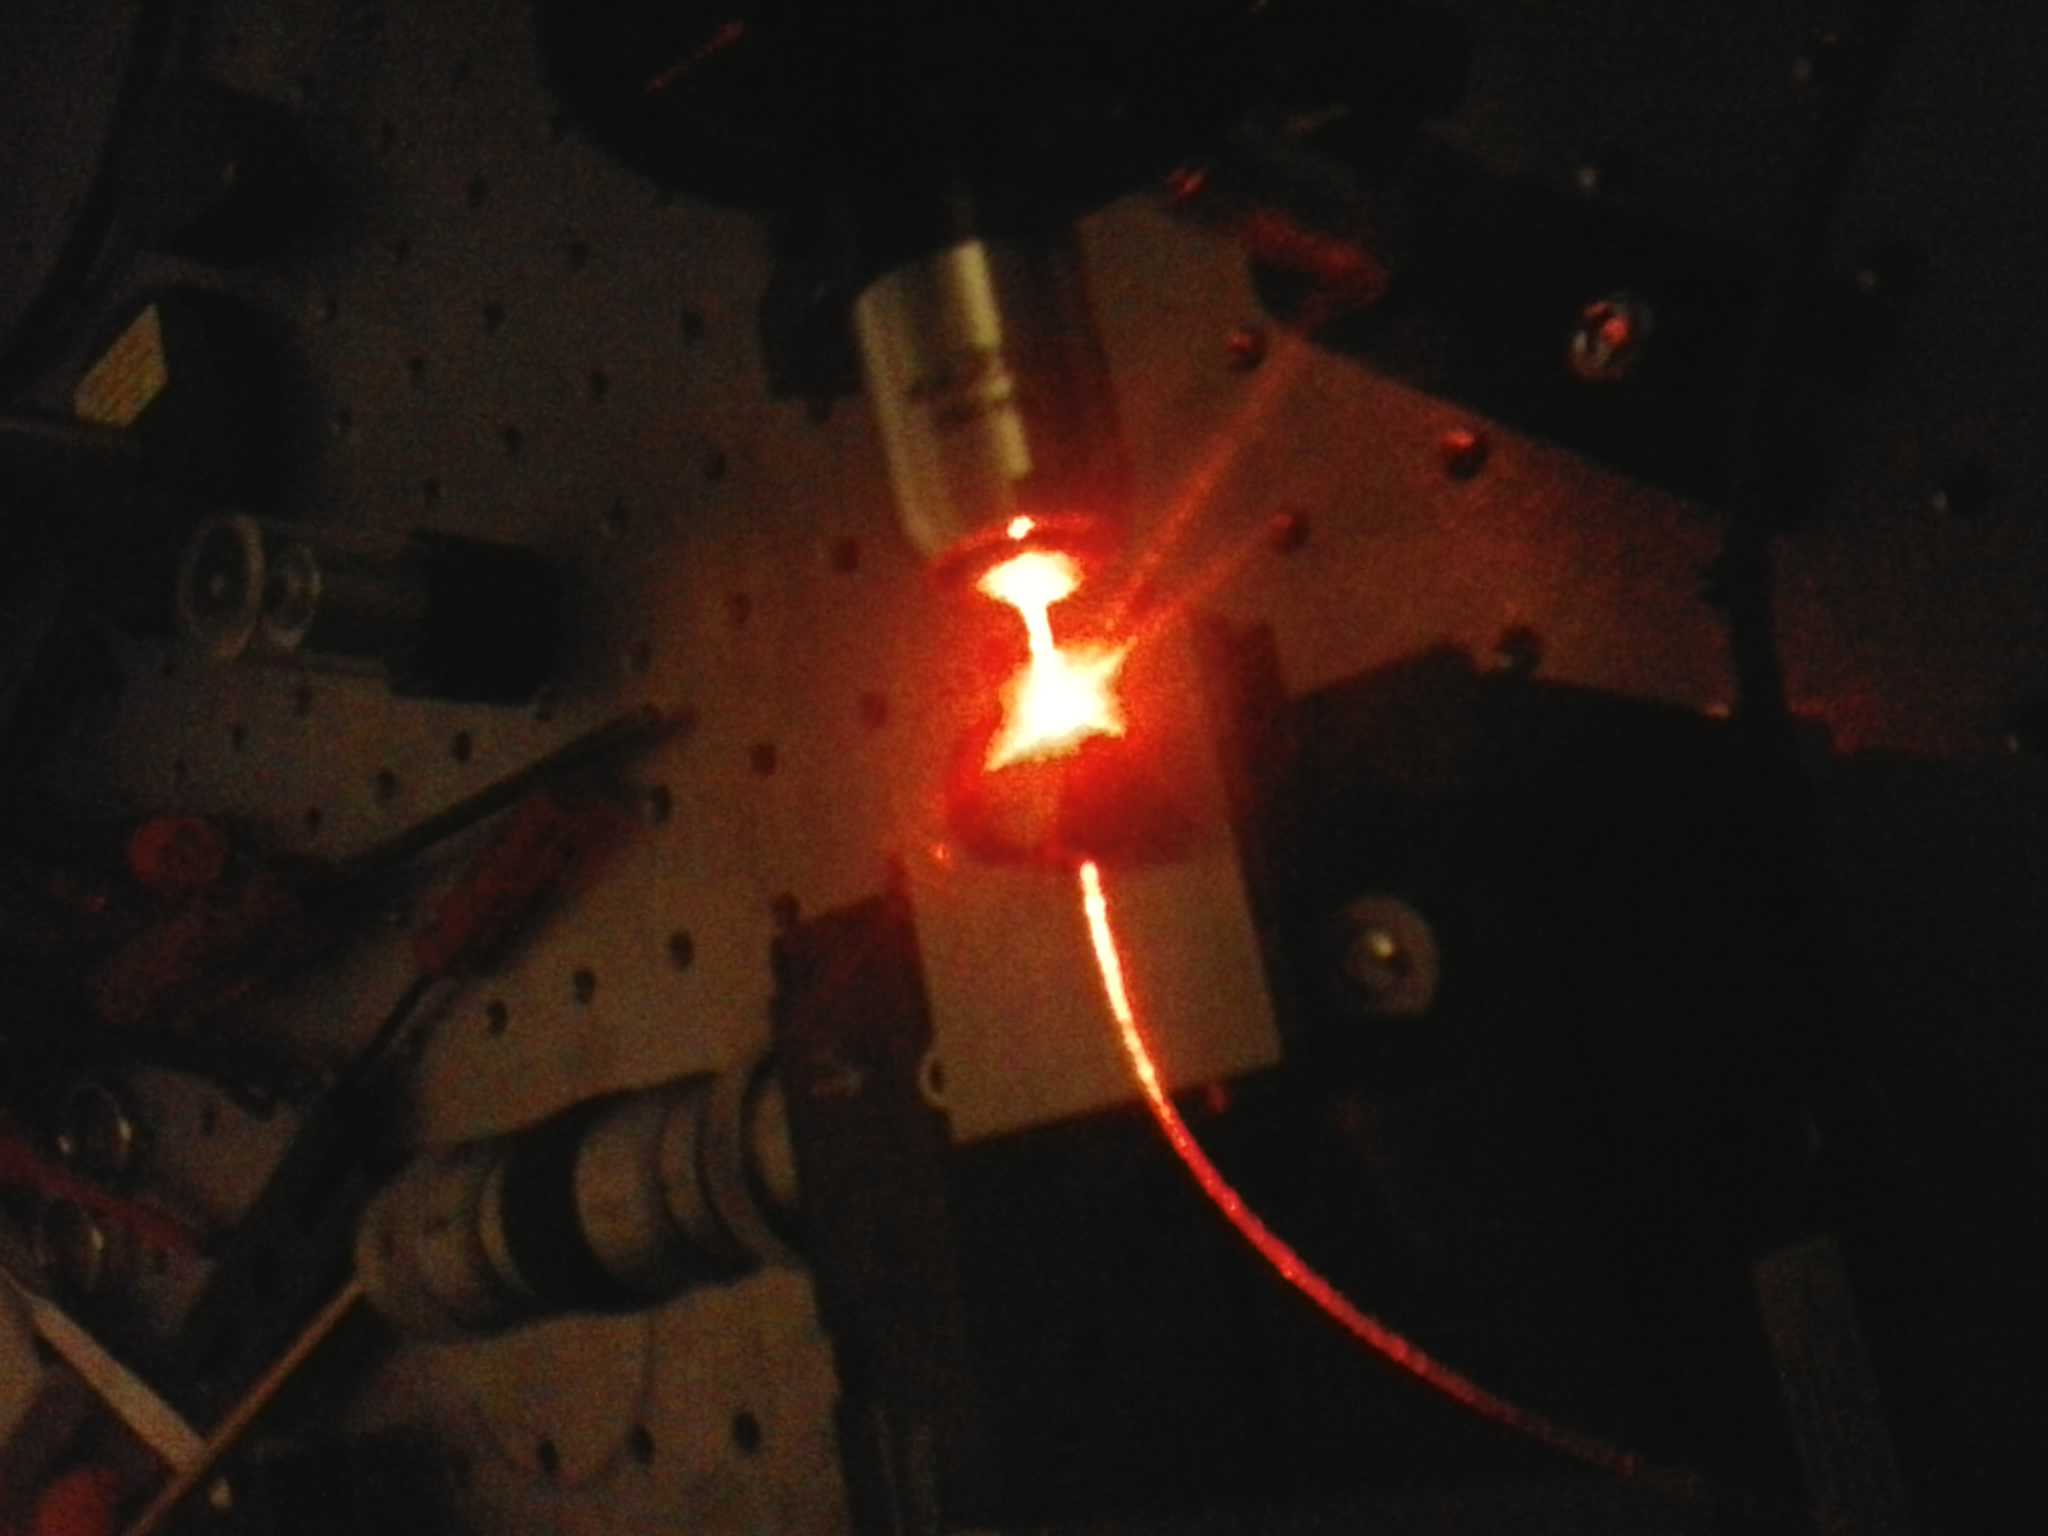 Experimental setup with optical laser and fiber